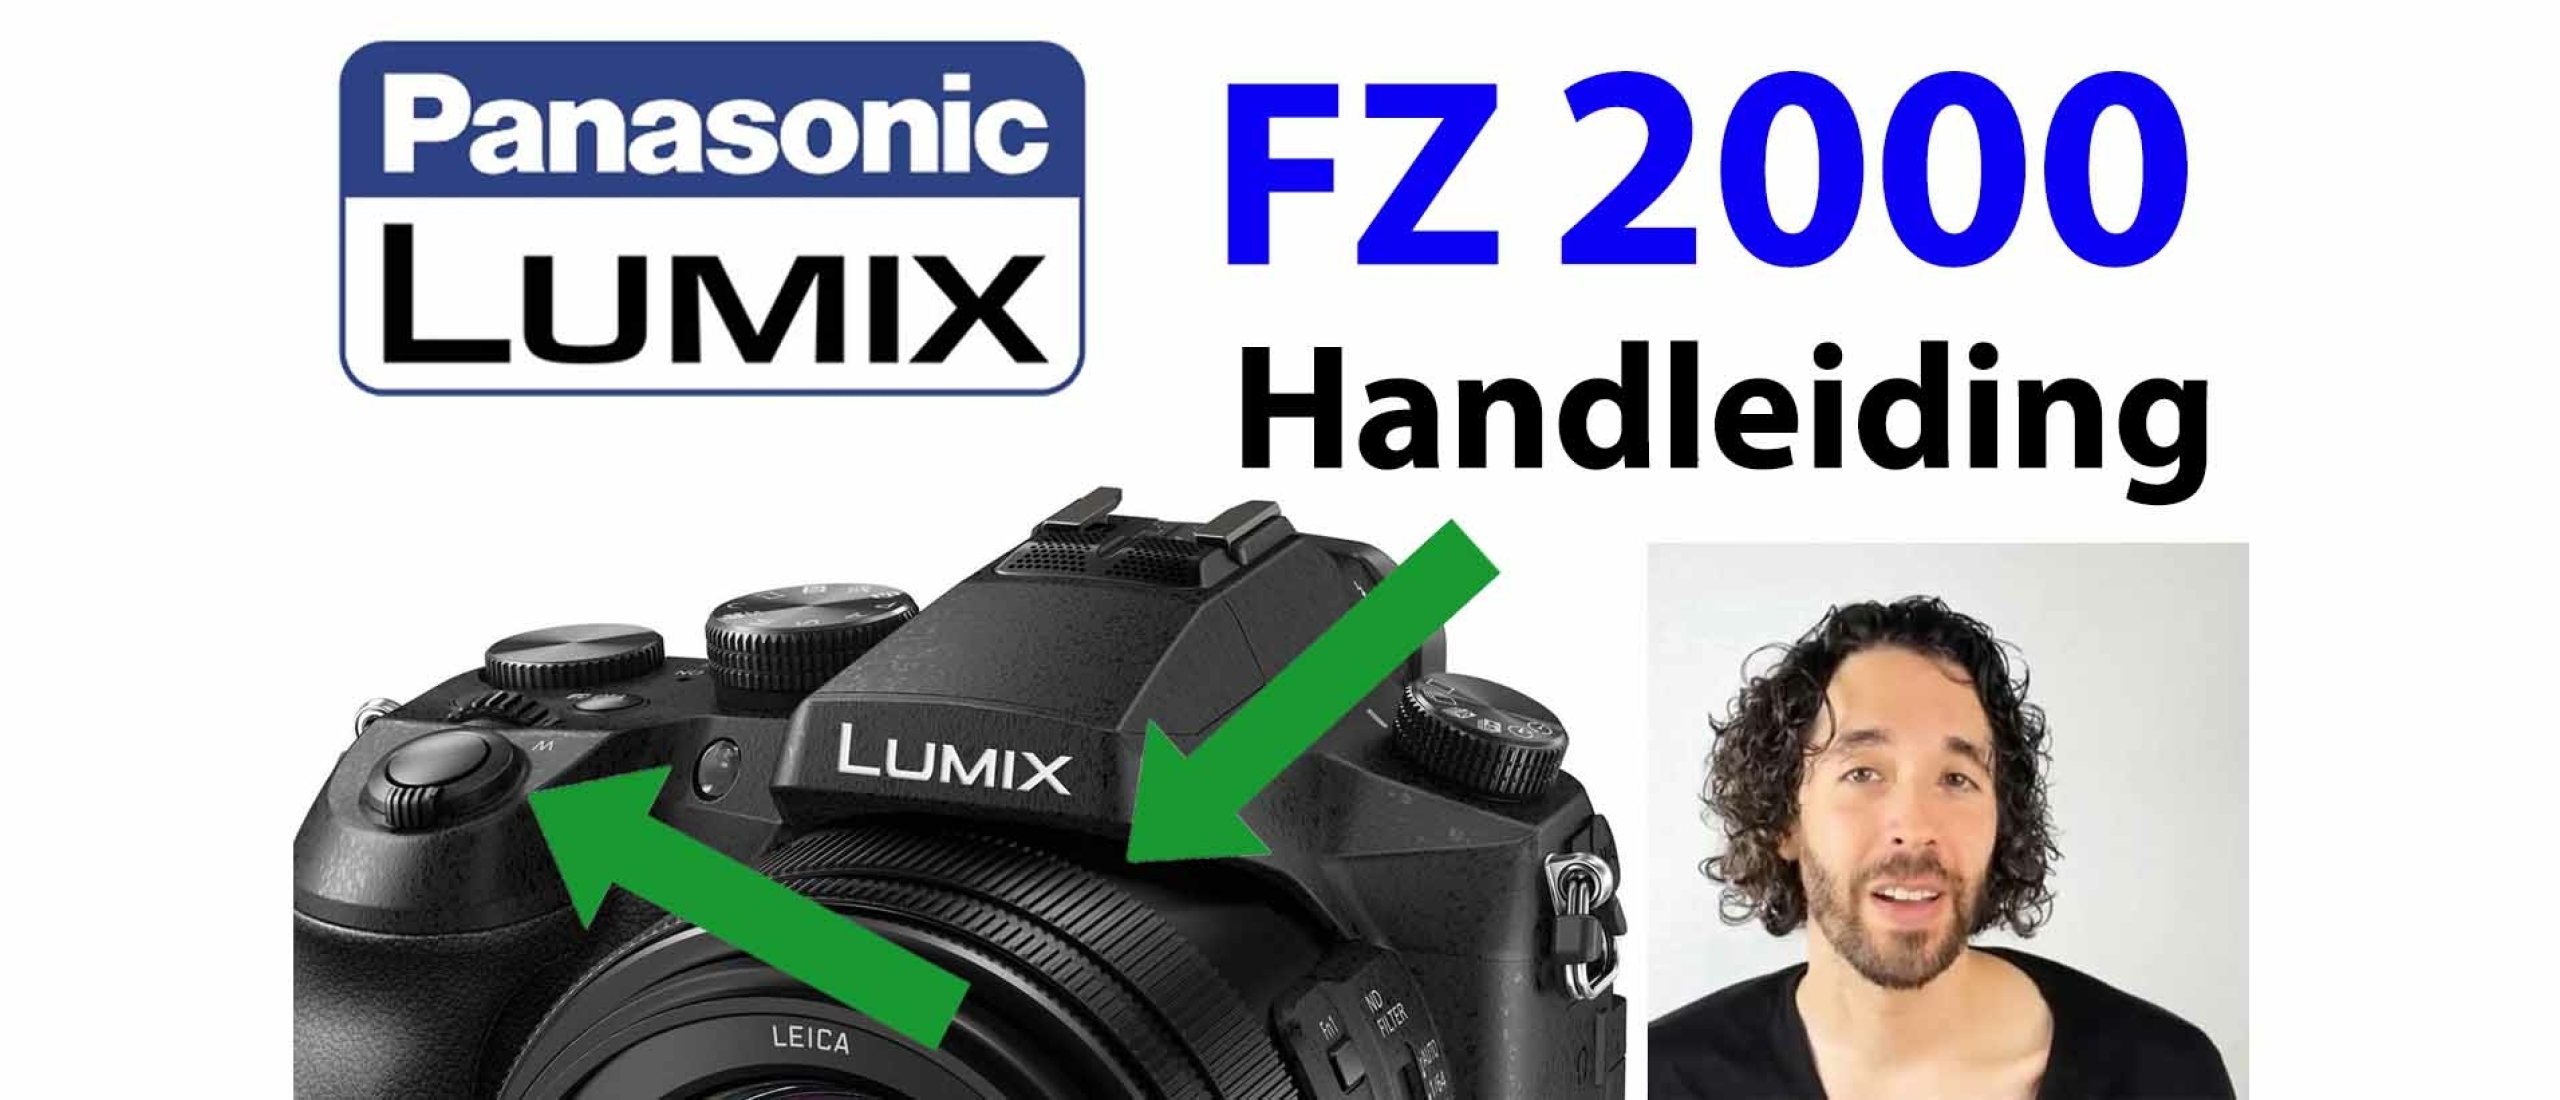 Panasonic Lumix DMC FZ2000 Handleiding Video: Instellingen, menu, knoppen uitleg